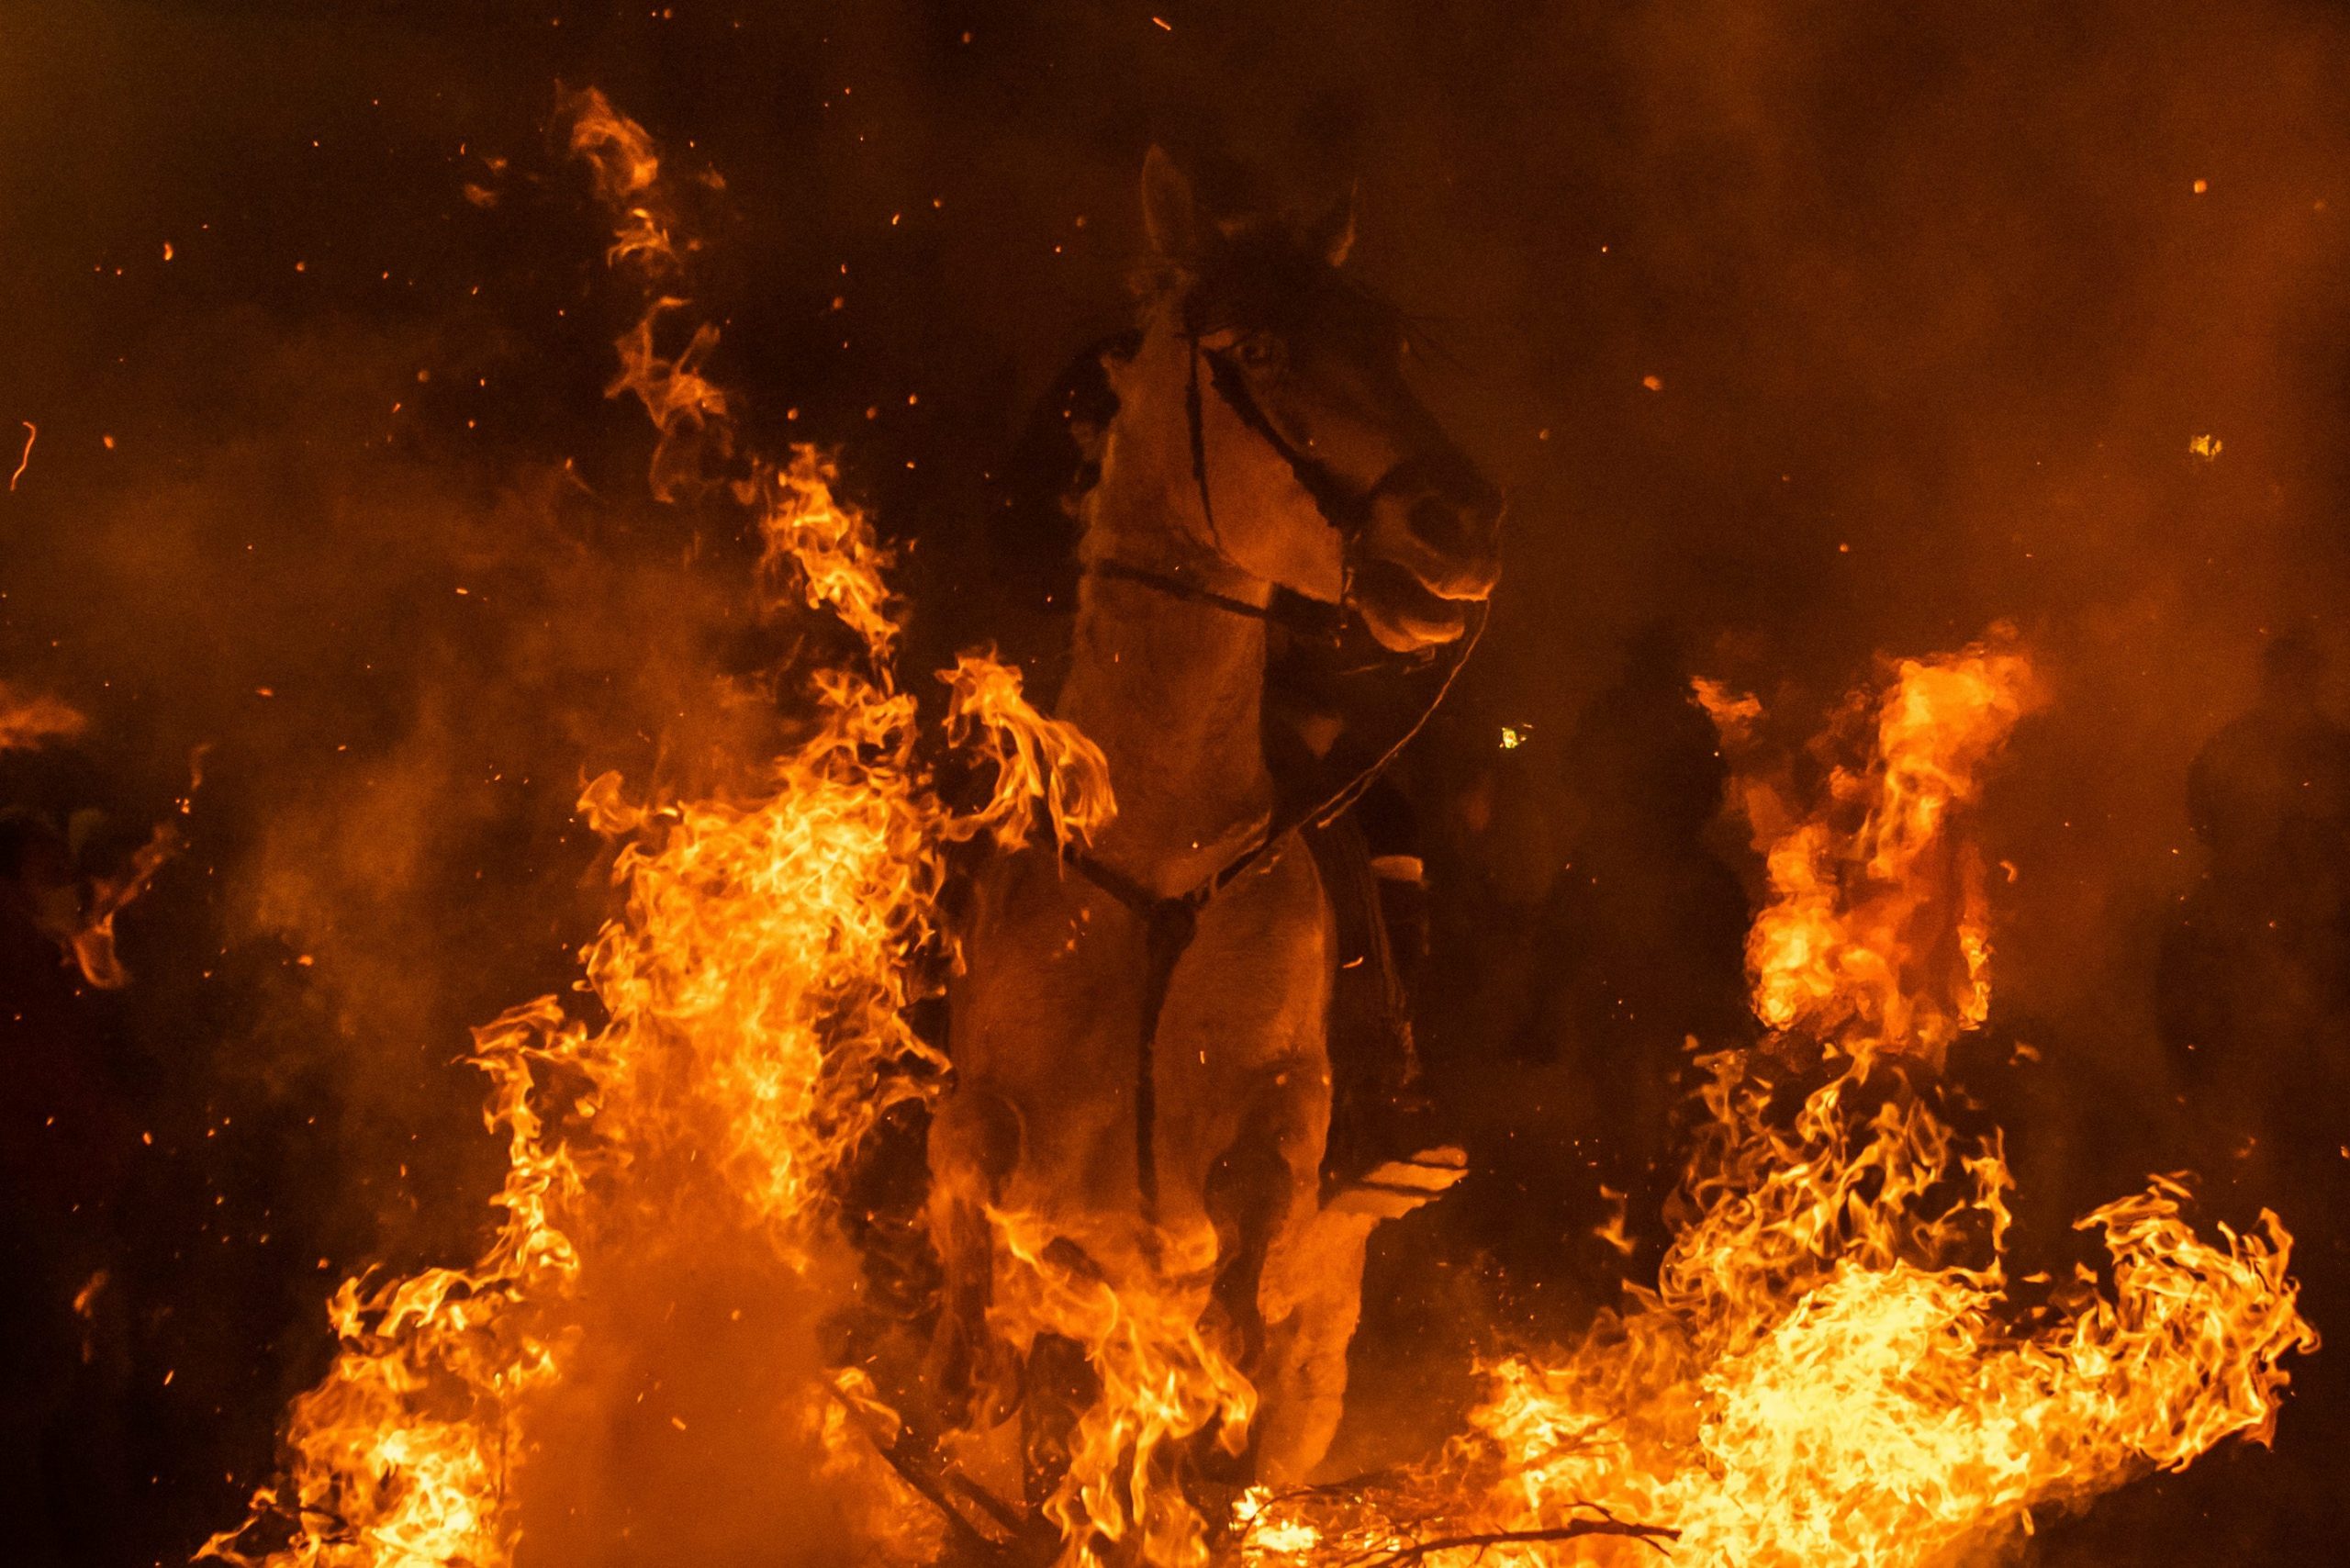 Horses jump through 'purification' bonfires during Las Luminarias ceremony in Spain